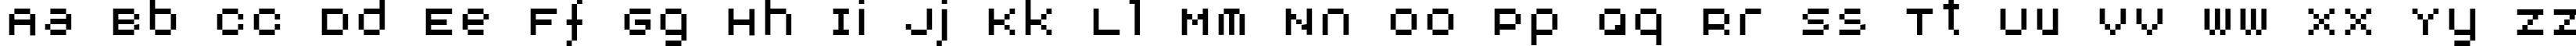 Пример написания английского алфавита шрифтом AuX DotBitC